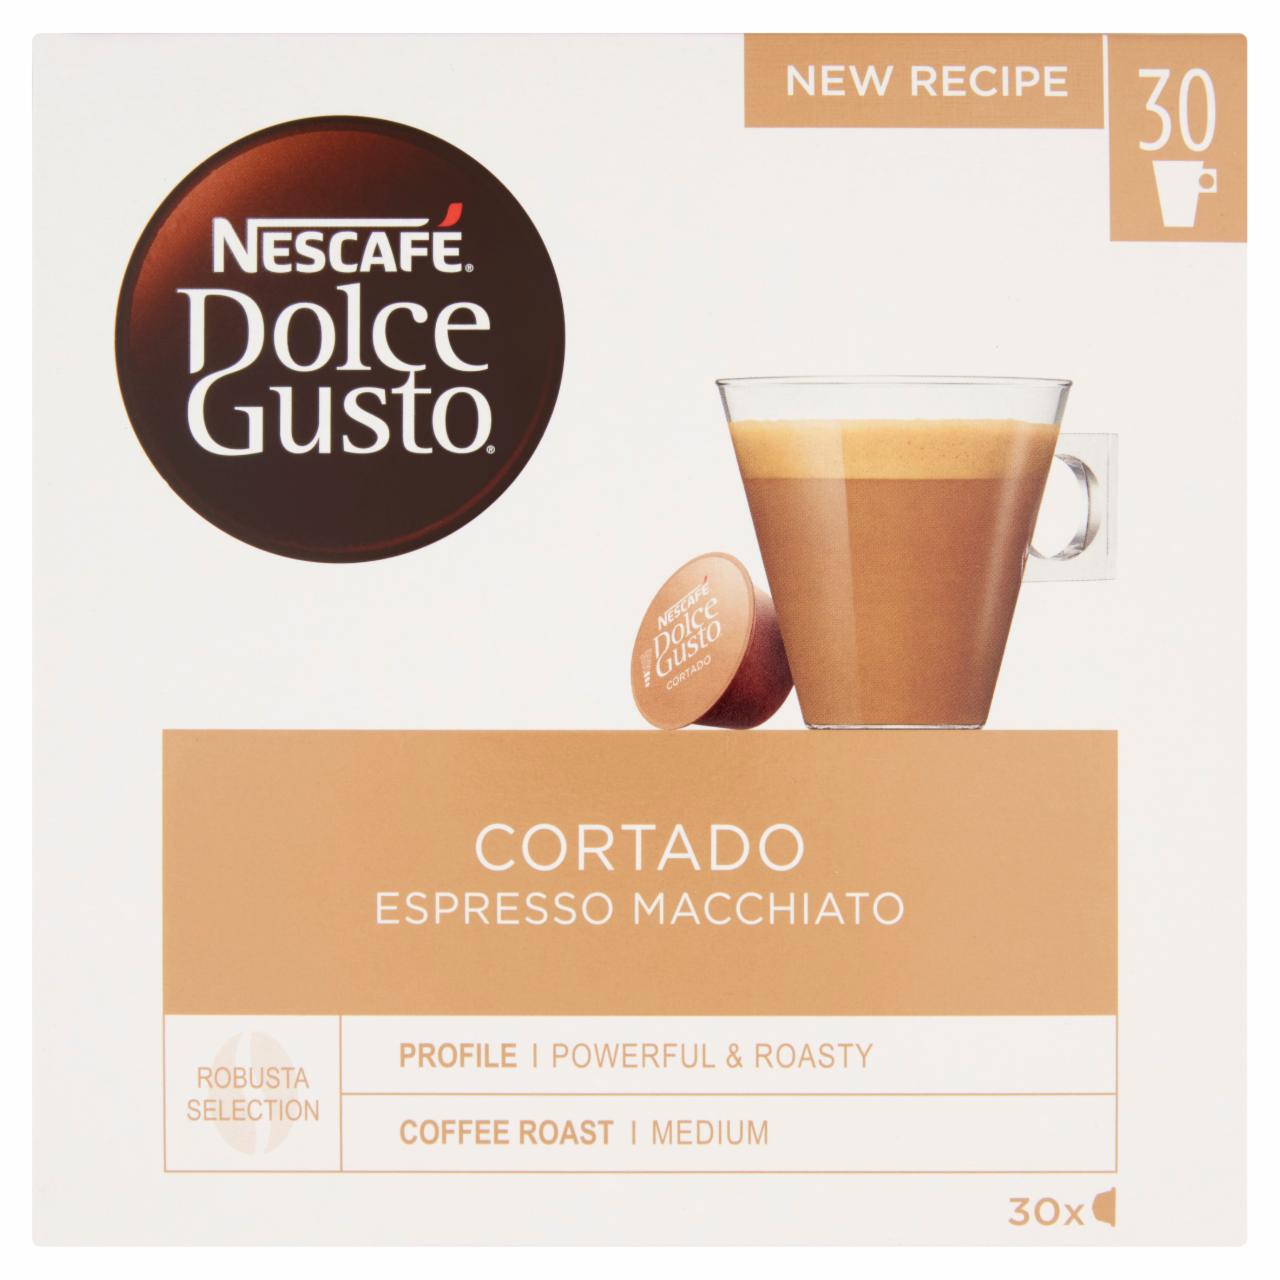 Képek - NESCAFÉ Dolce Gusto Cortado Espresso Macchiato tejes kávékapszula 30 db/30 csésze 189 g